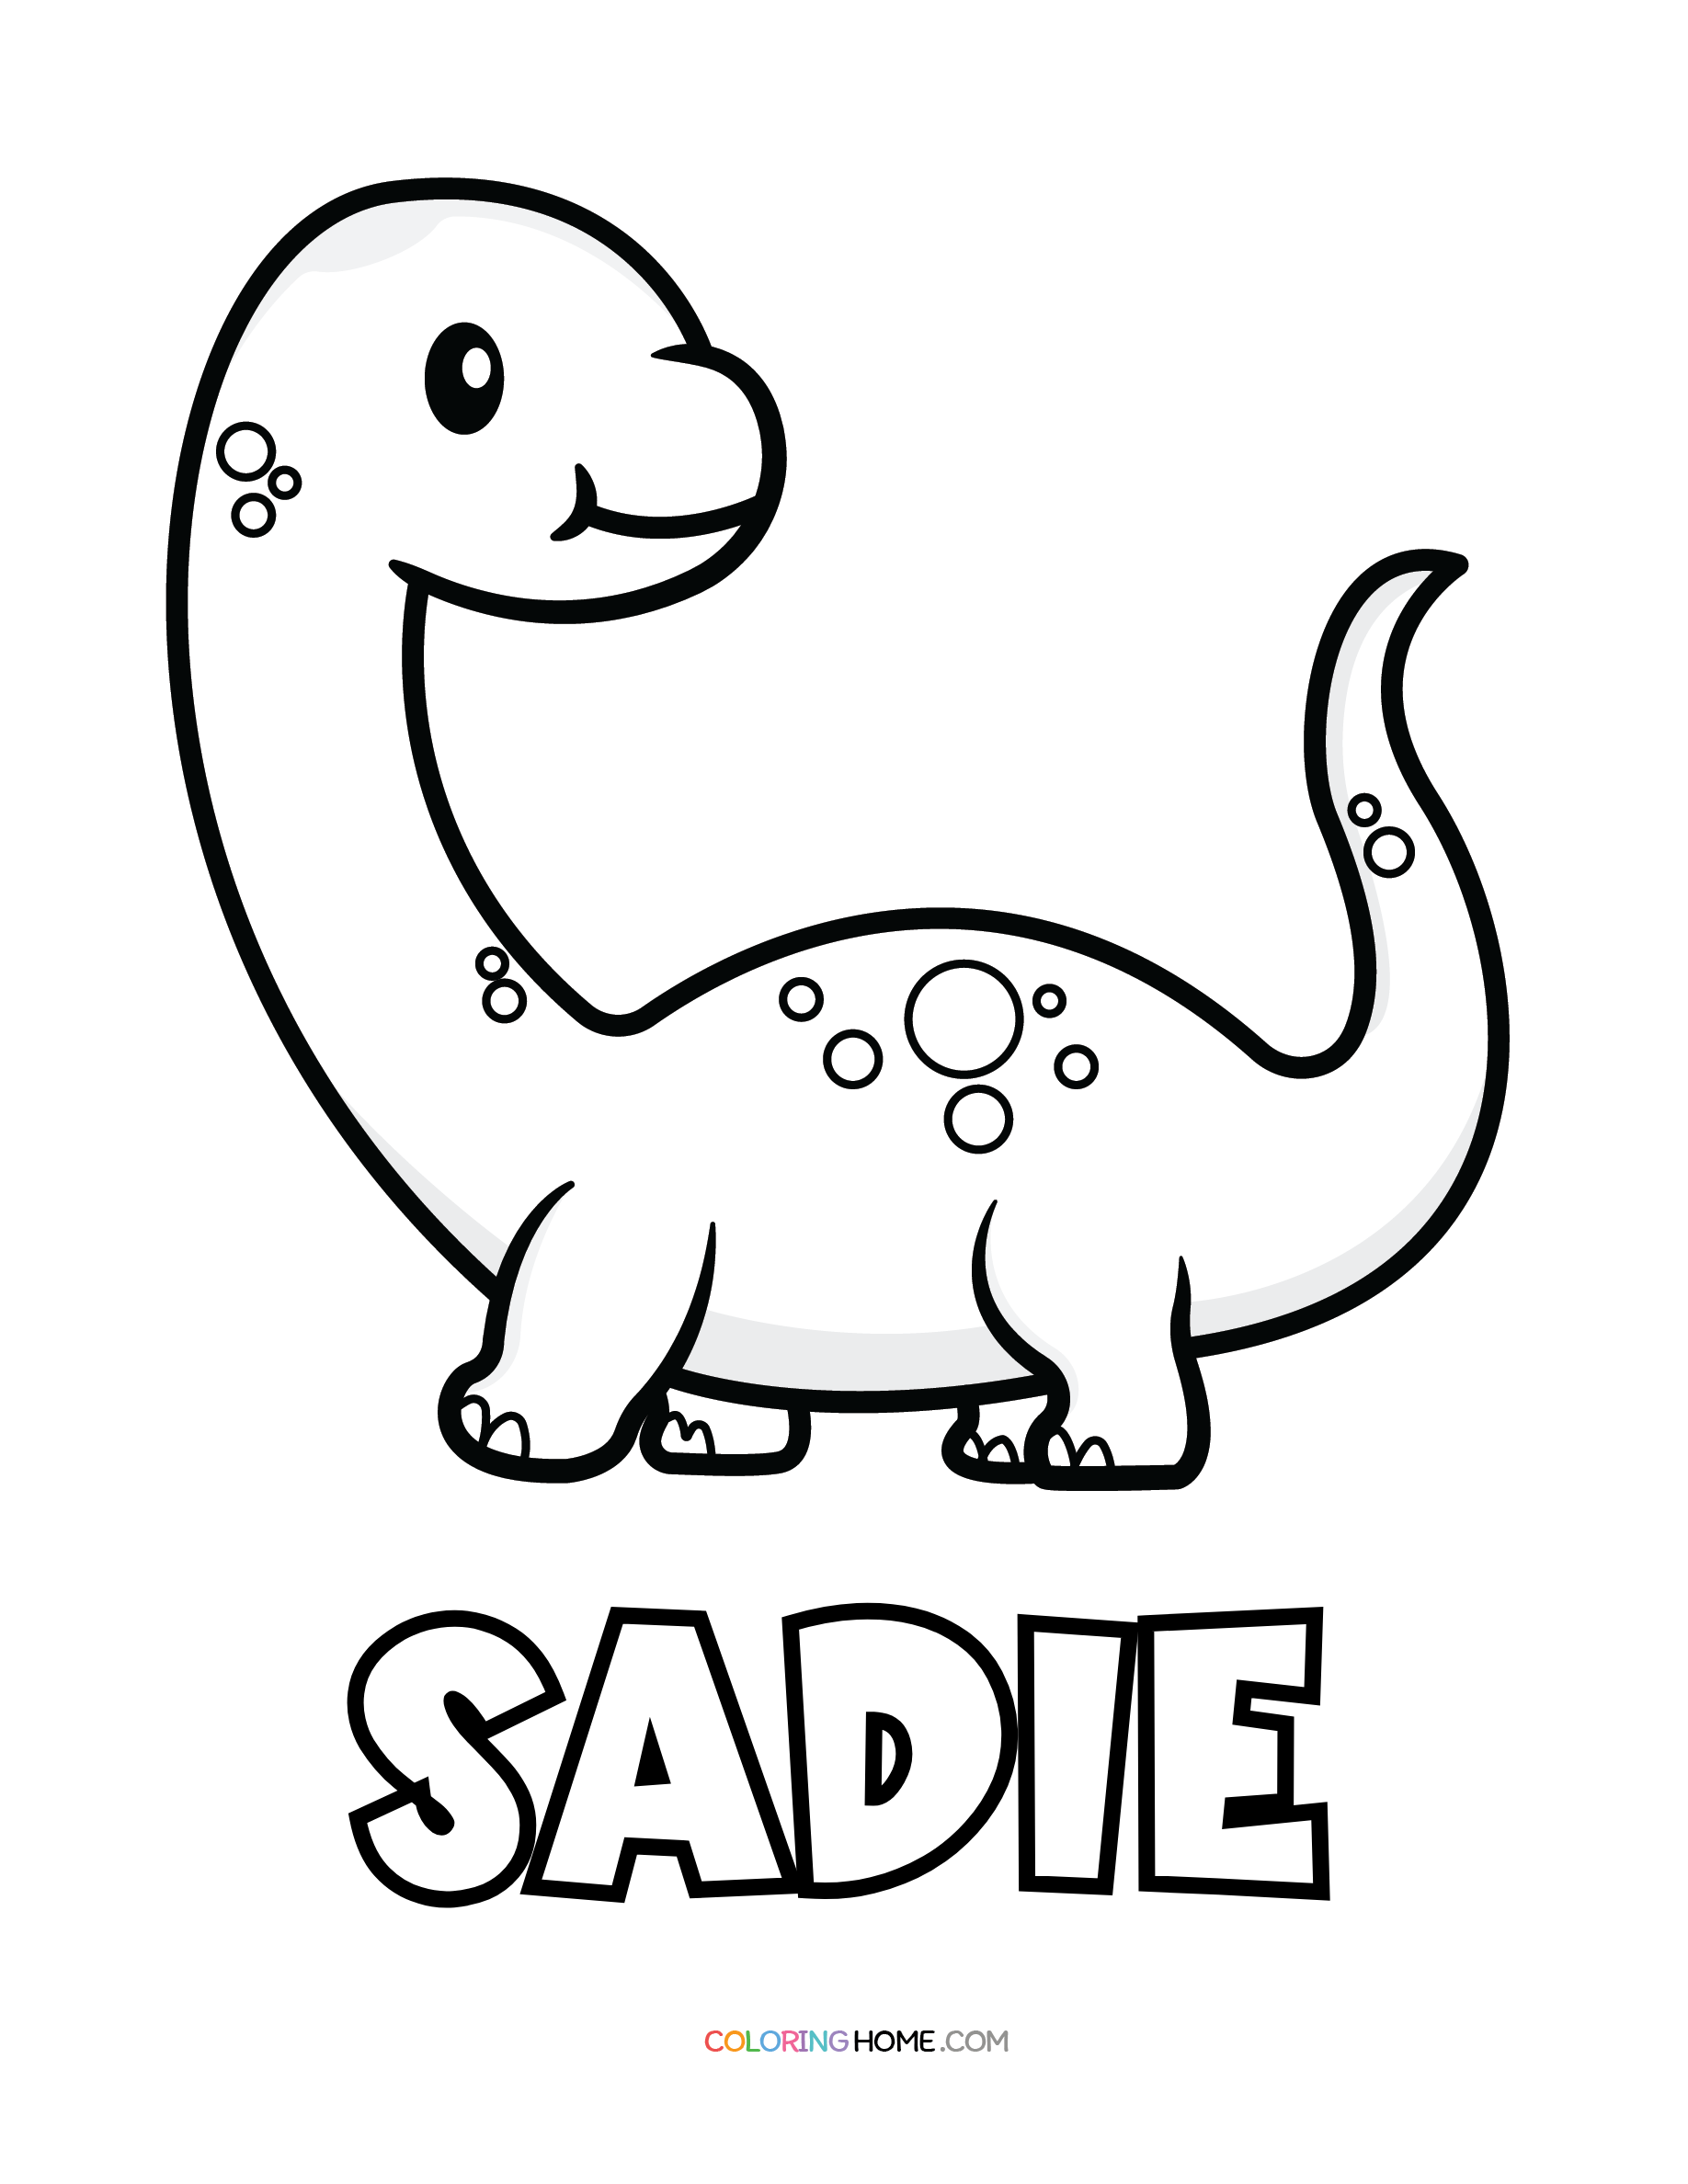 Sadie dinosaur coloring page